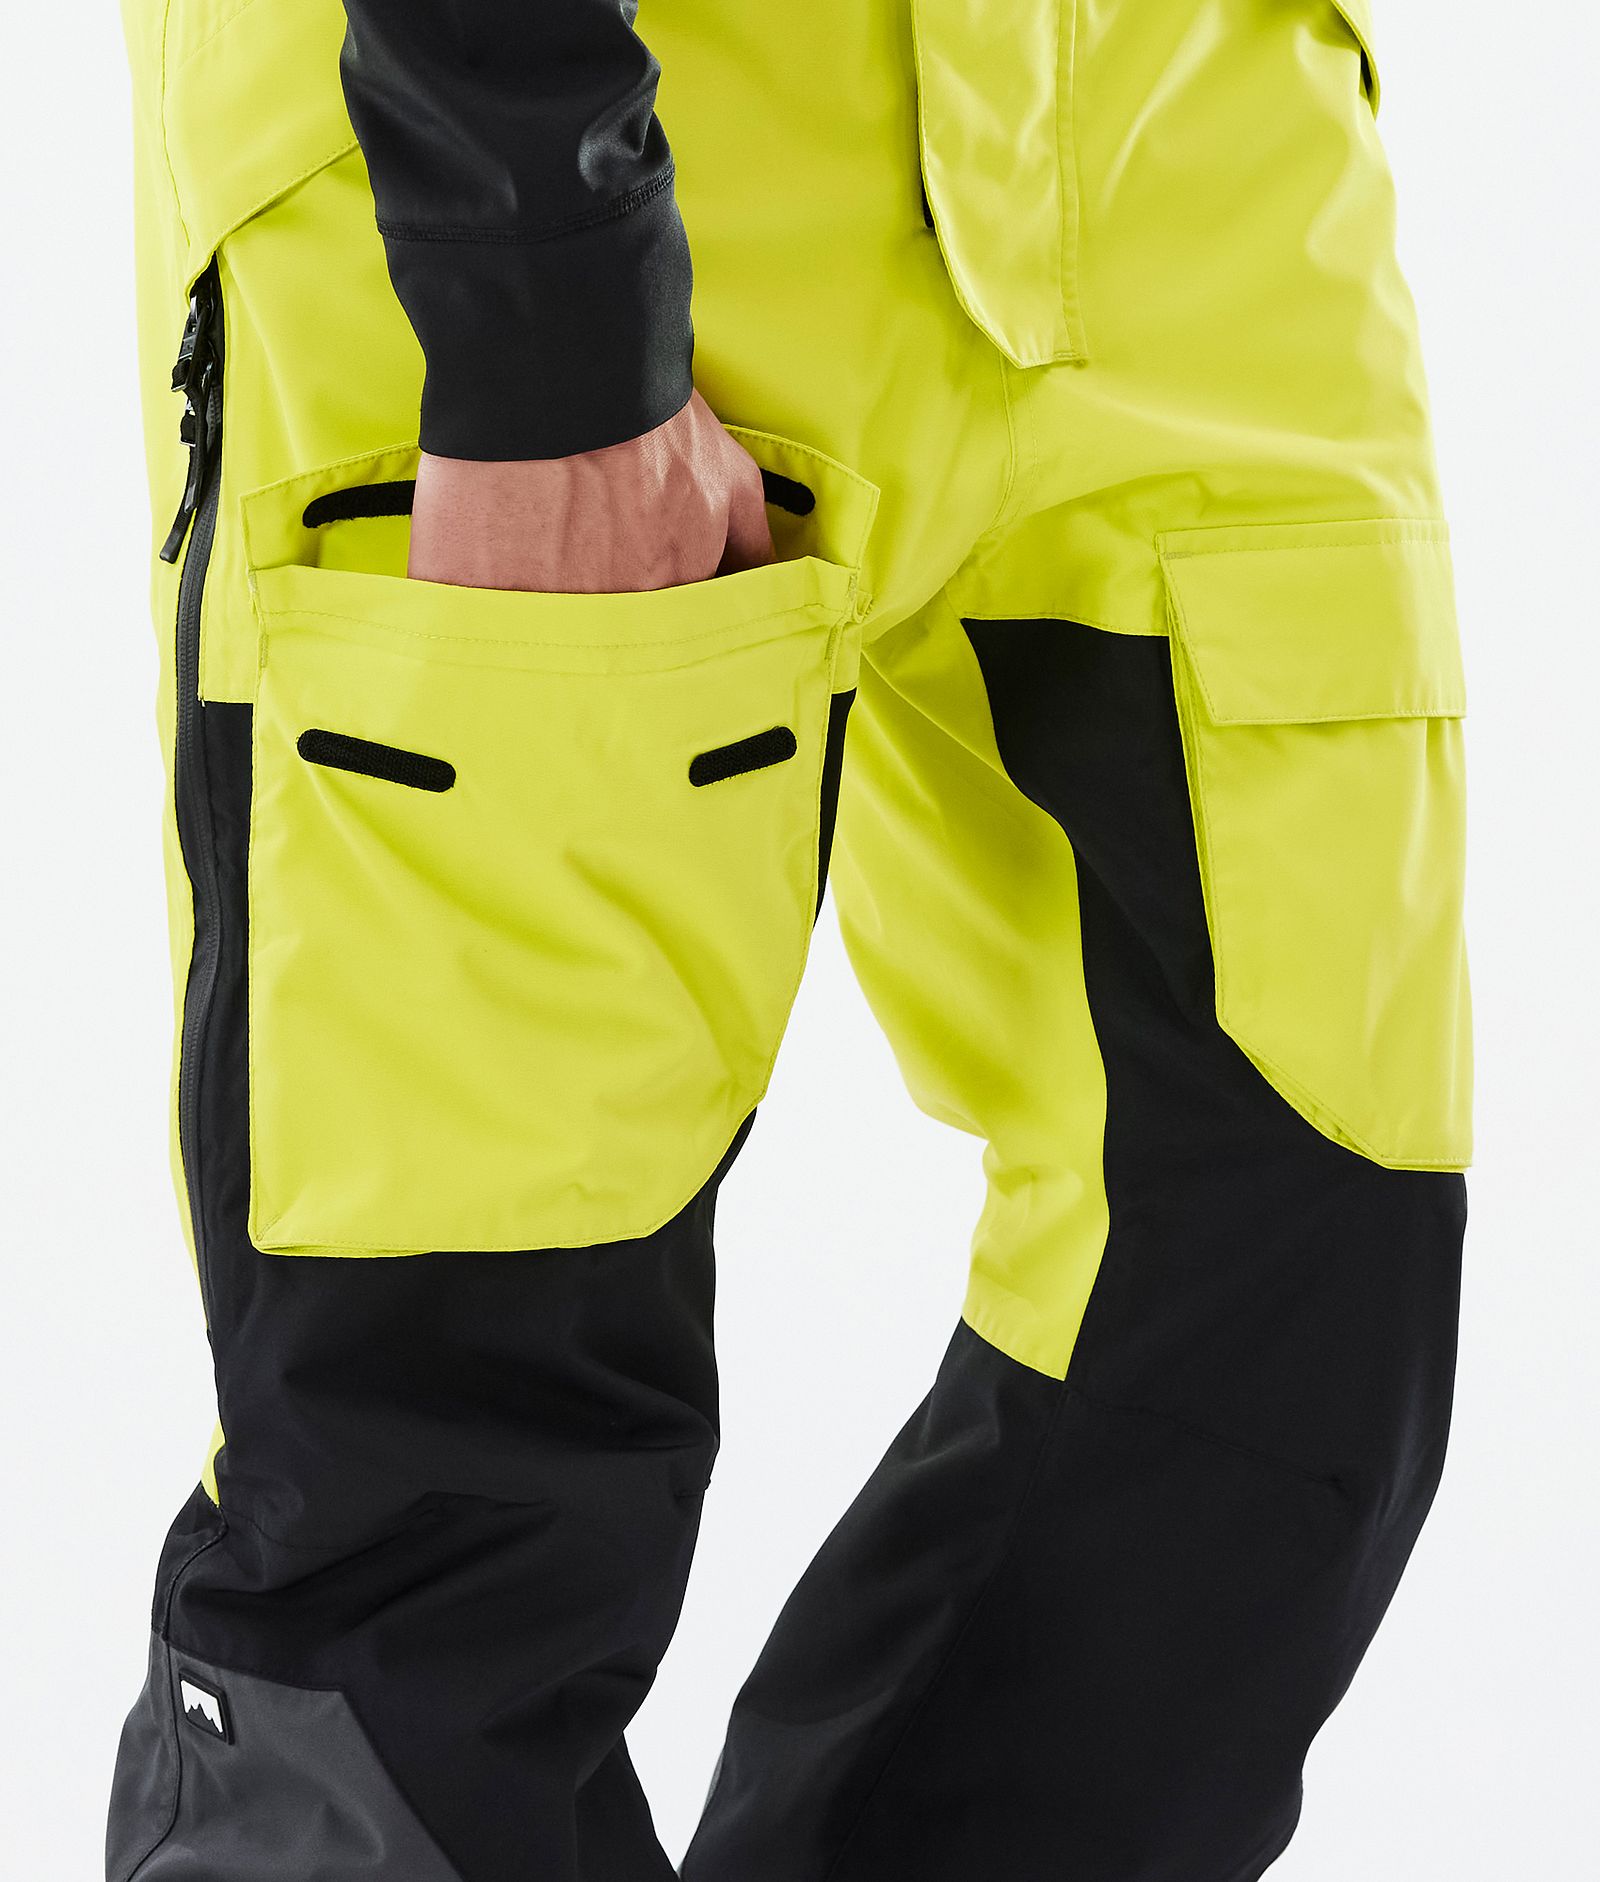 Fawk Pantalon de Snowboard Homme Bright Yellow/Black/Phantom Renewed, Image 6 sur 6